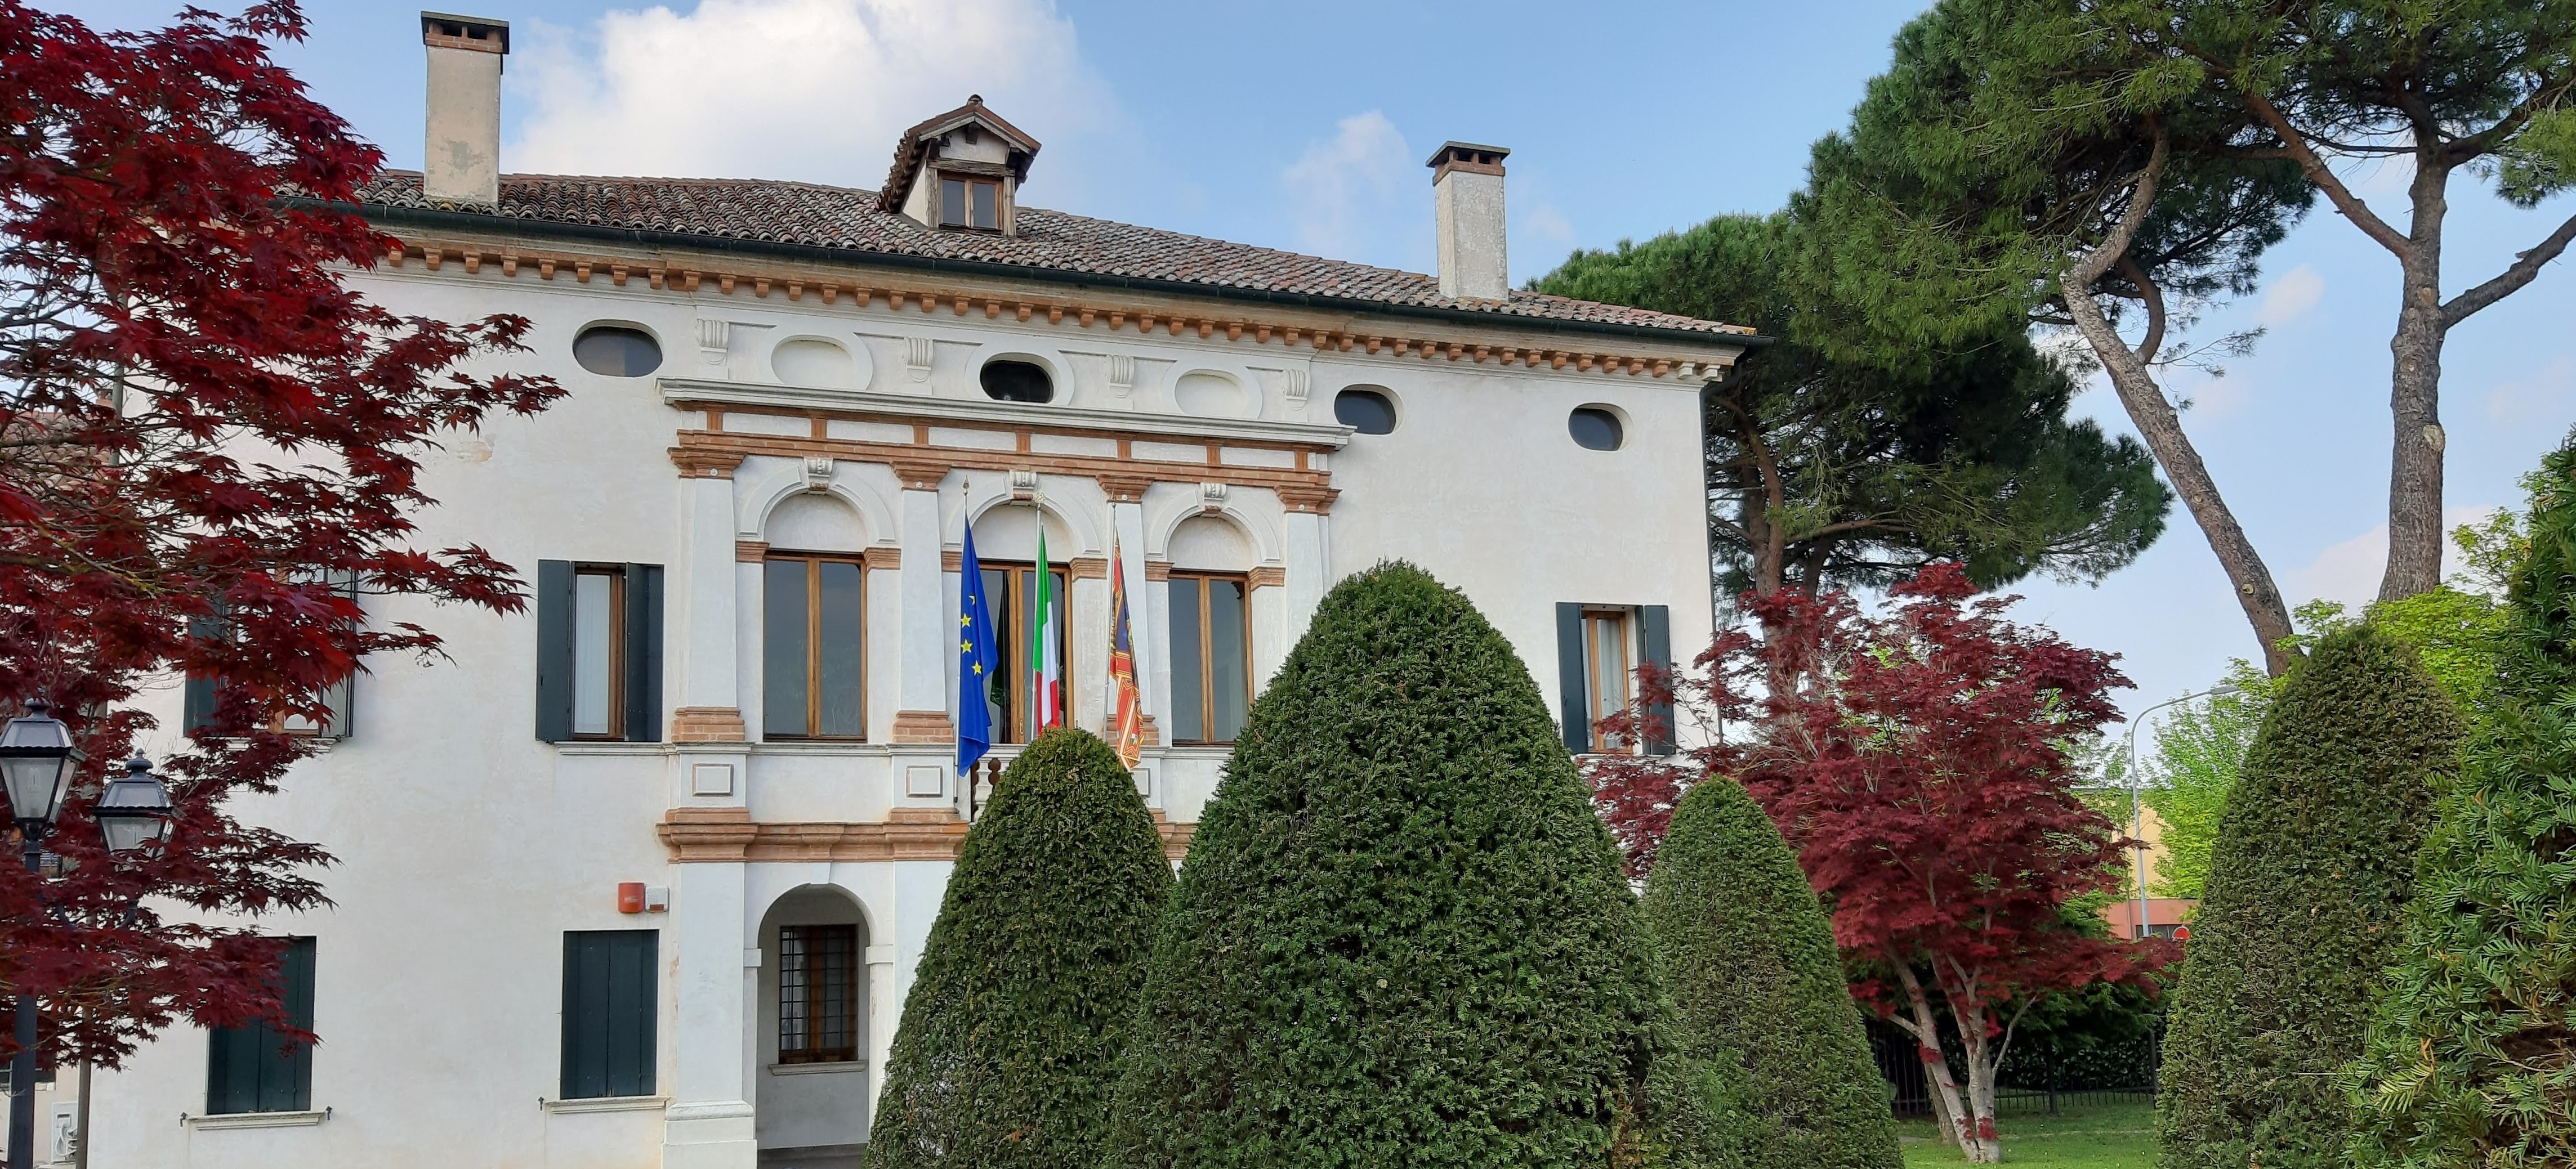 Palazzo Mingoni - Sede Municipale - XVII sec